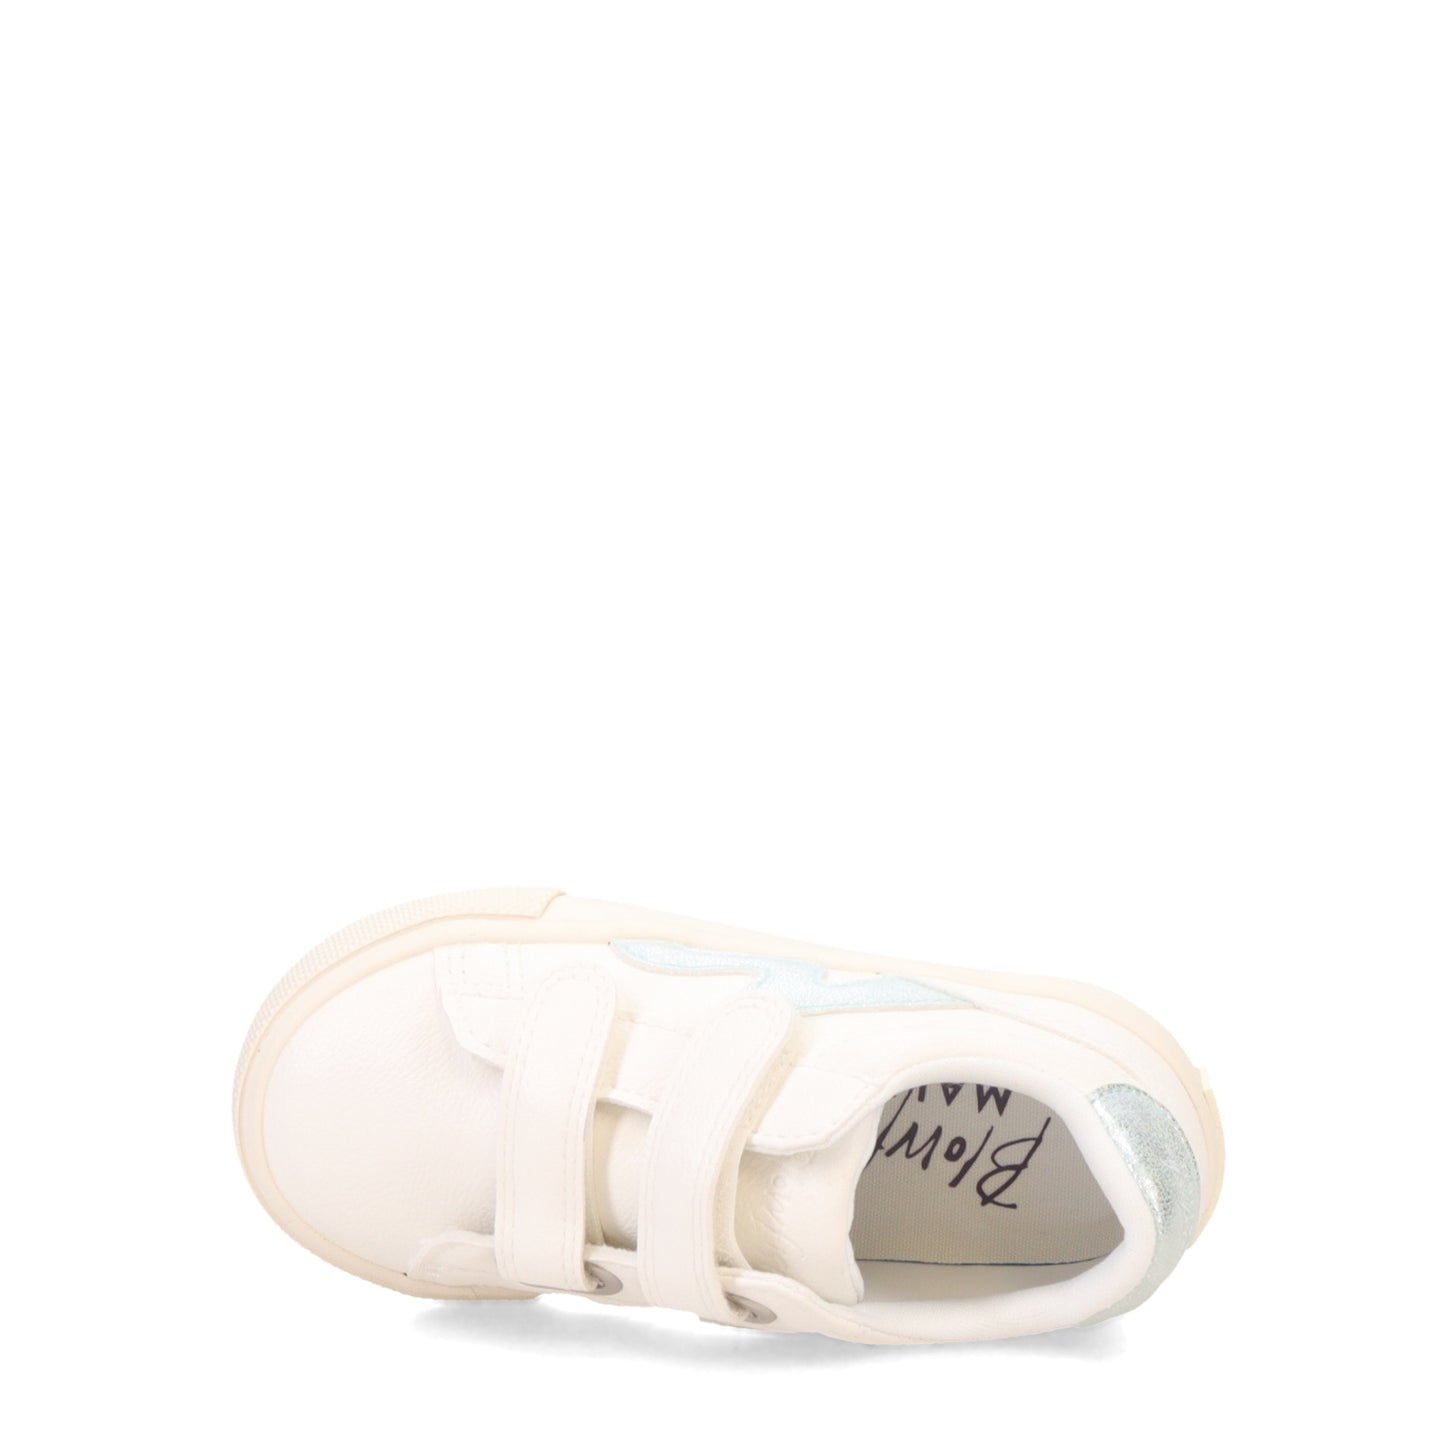 Peltz Shoes  Girl's Blowfish Malibu Vice-T Sneaker - Toddler & Little Kid White/Mint ZS-1736B-T-089